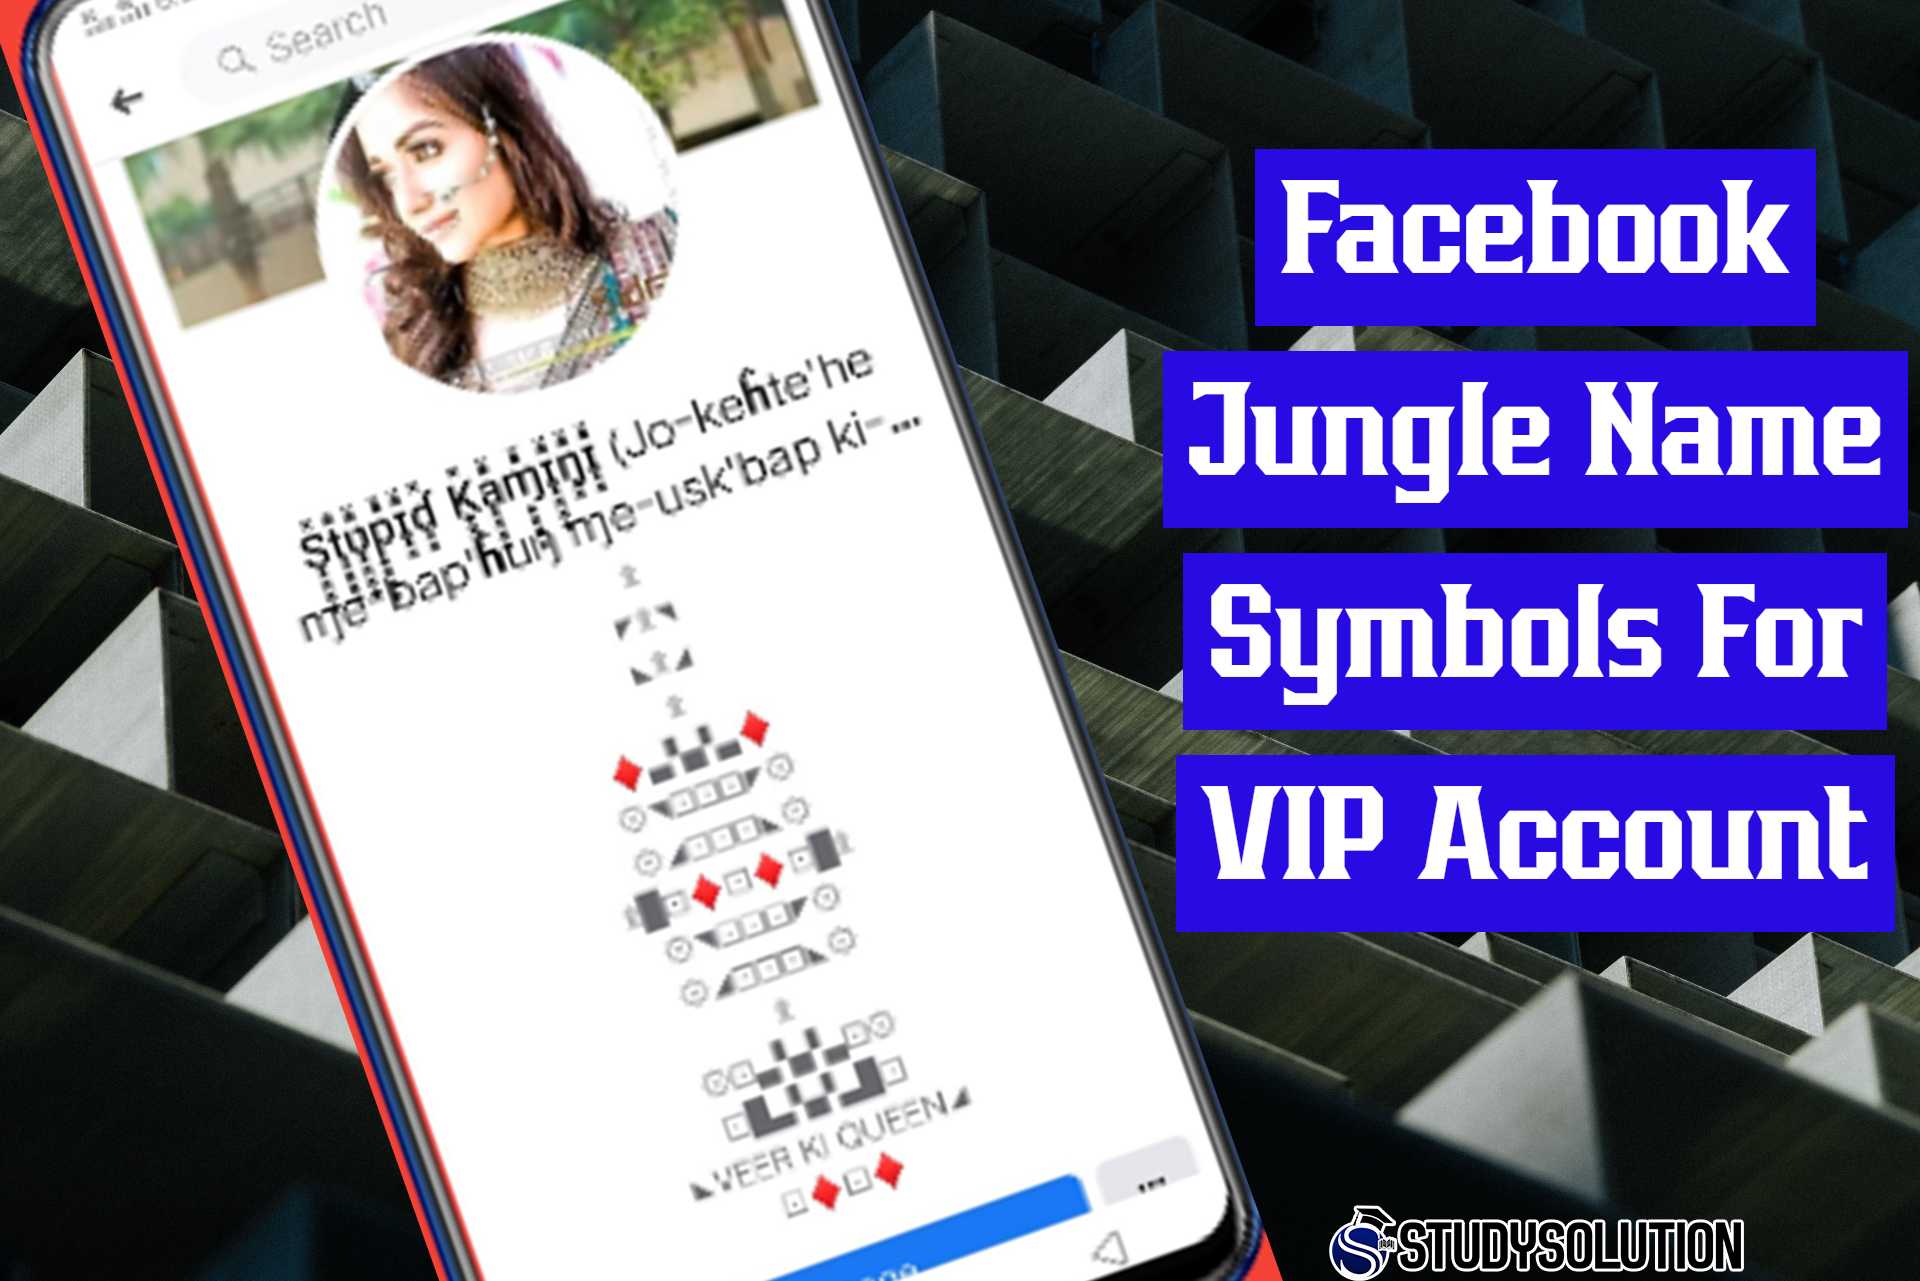 Facebook Jungle Name Symbols For VIP Account